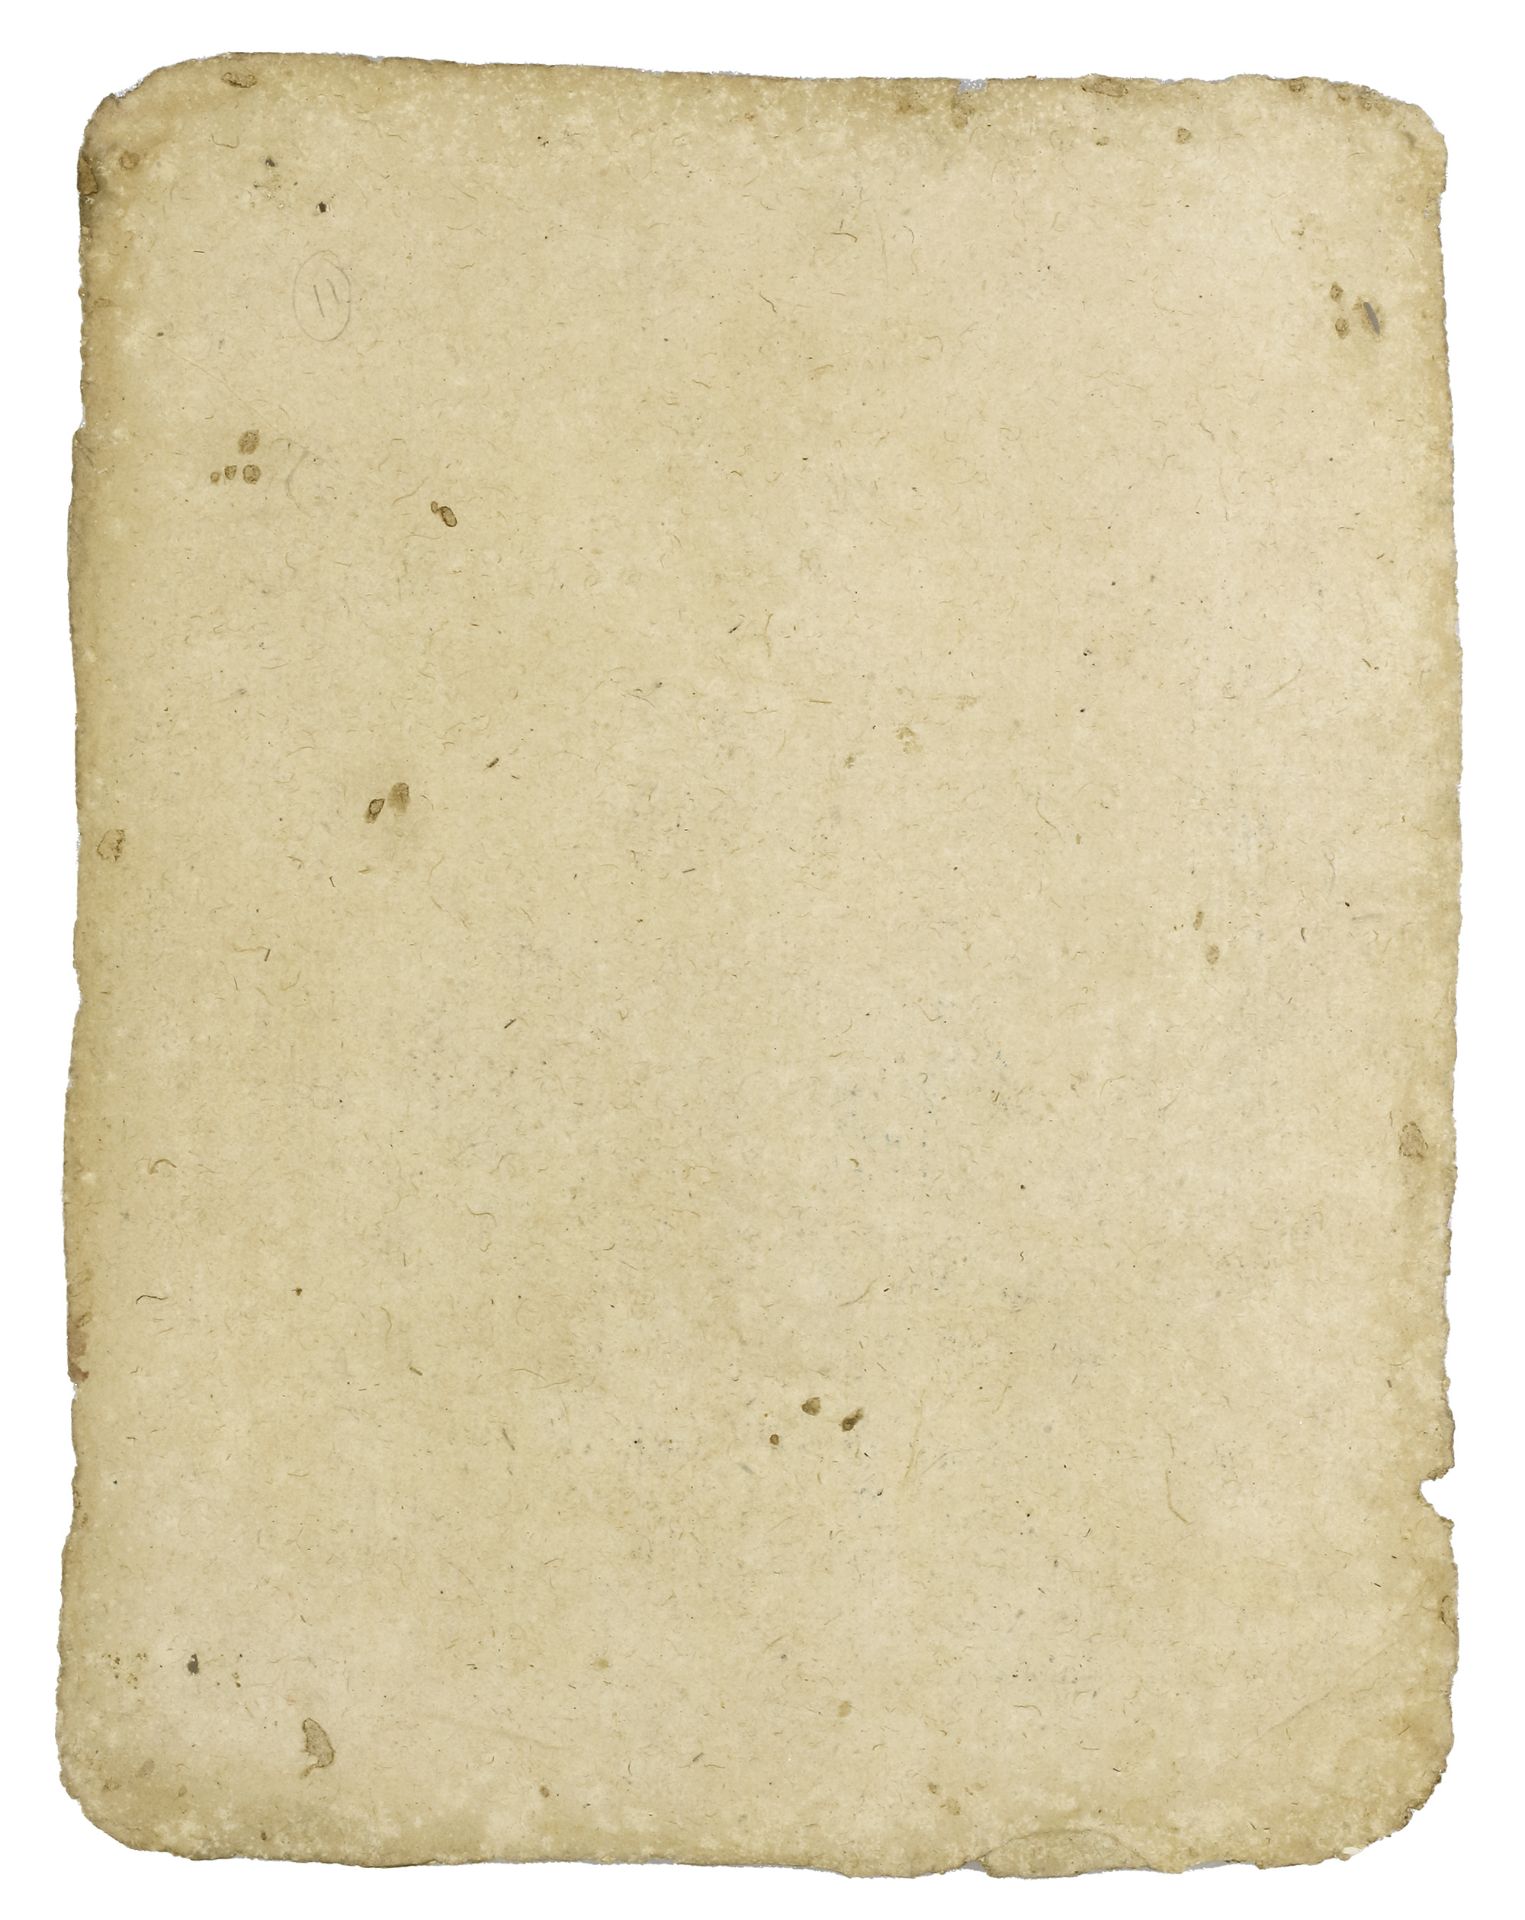 SULTAN 'ALI 'ADIL SHAH OF BIJAPUR (R. 1557-79), INDIA, DECCAN, BIJAPUR, CIRCA 18TH OR 19TH CENTURY - Image 3 of 4